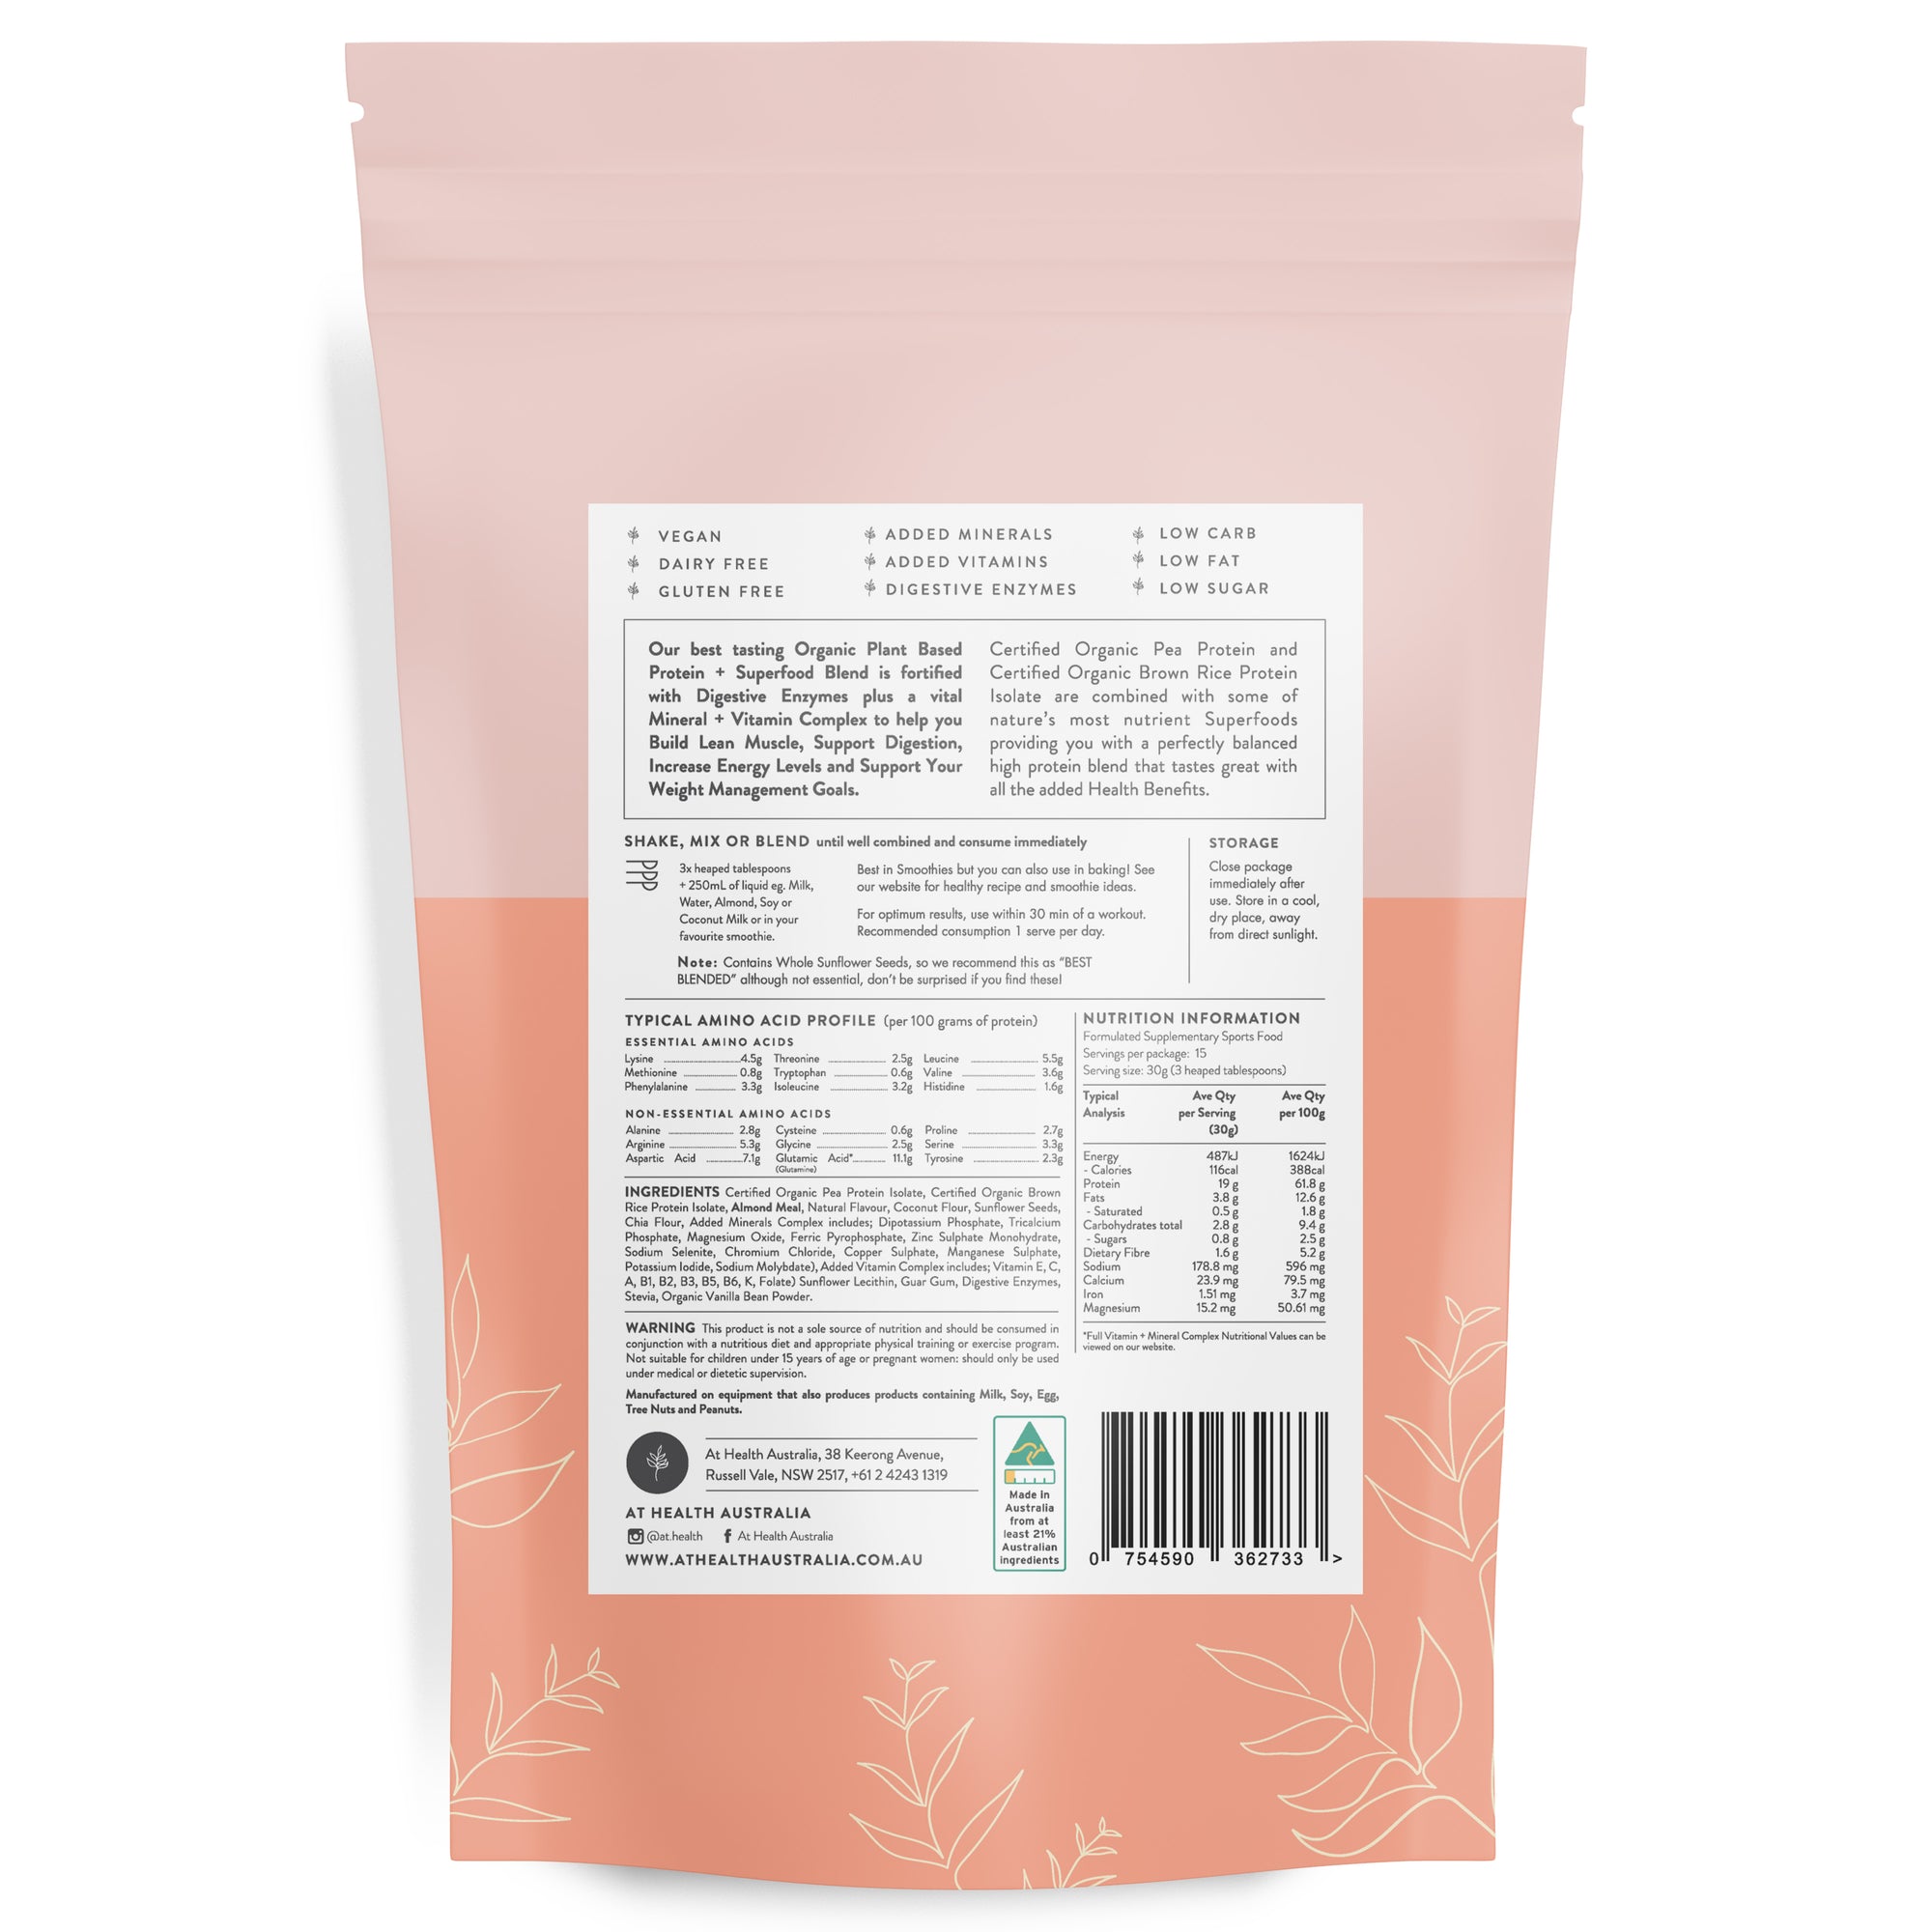 Vegan Organic Plant Based Protein Powder - Vanilla & Almond